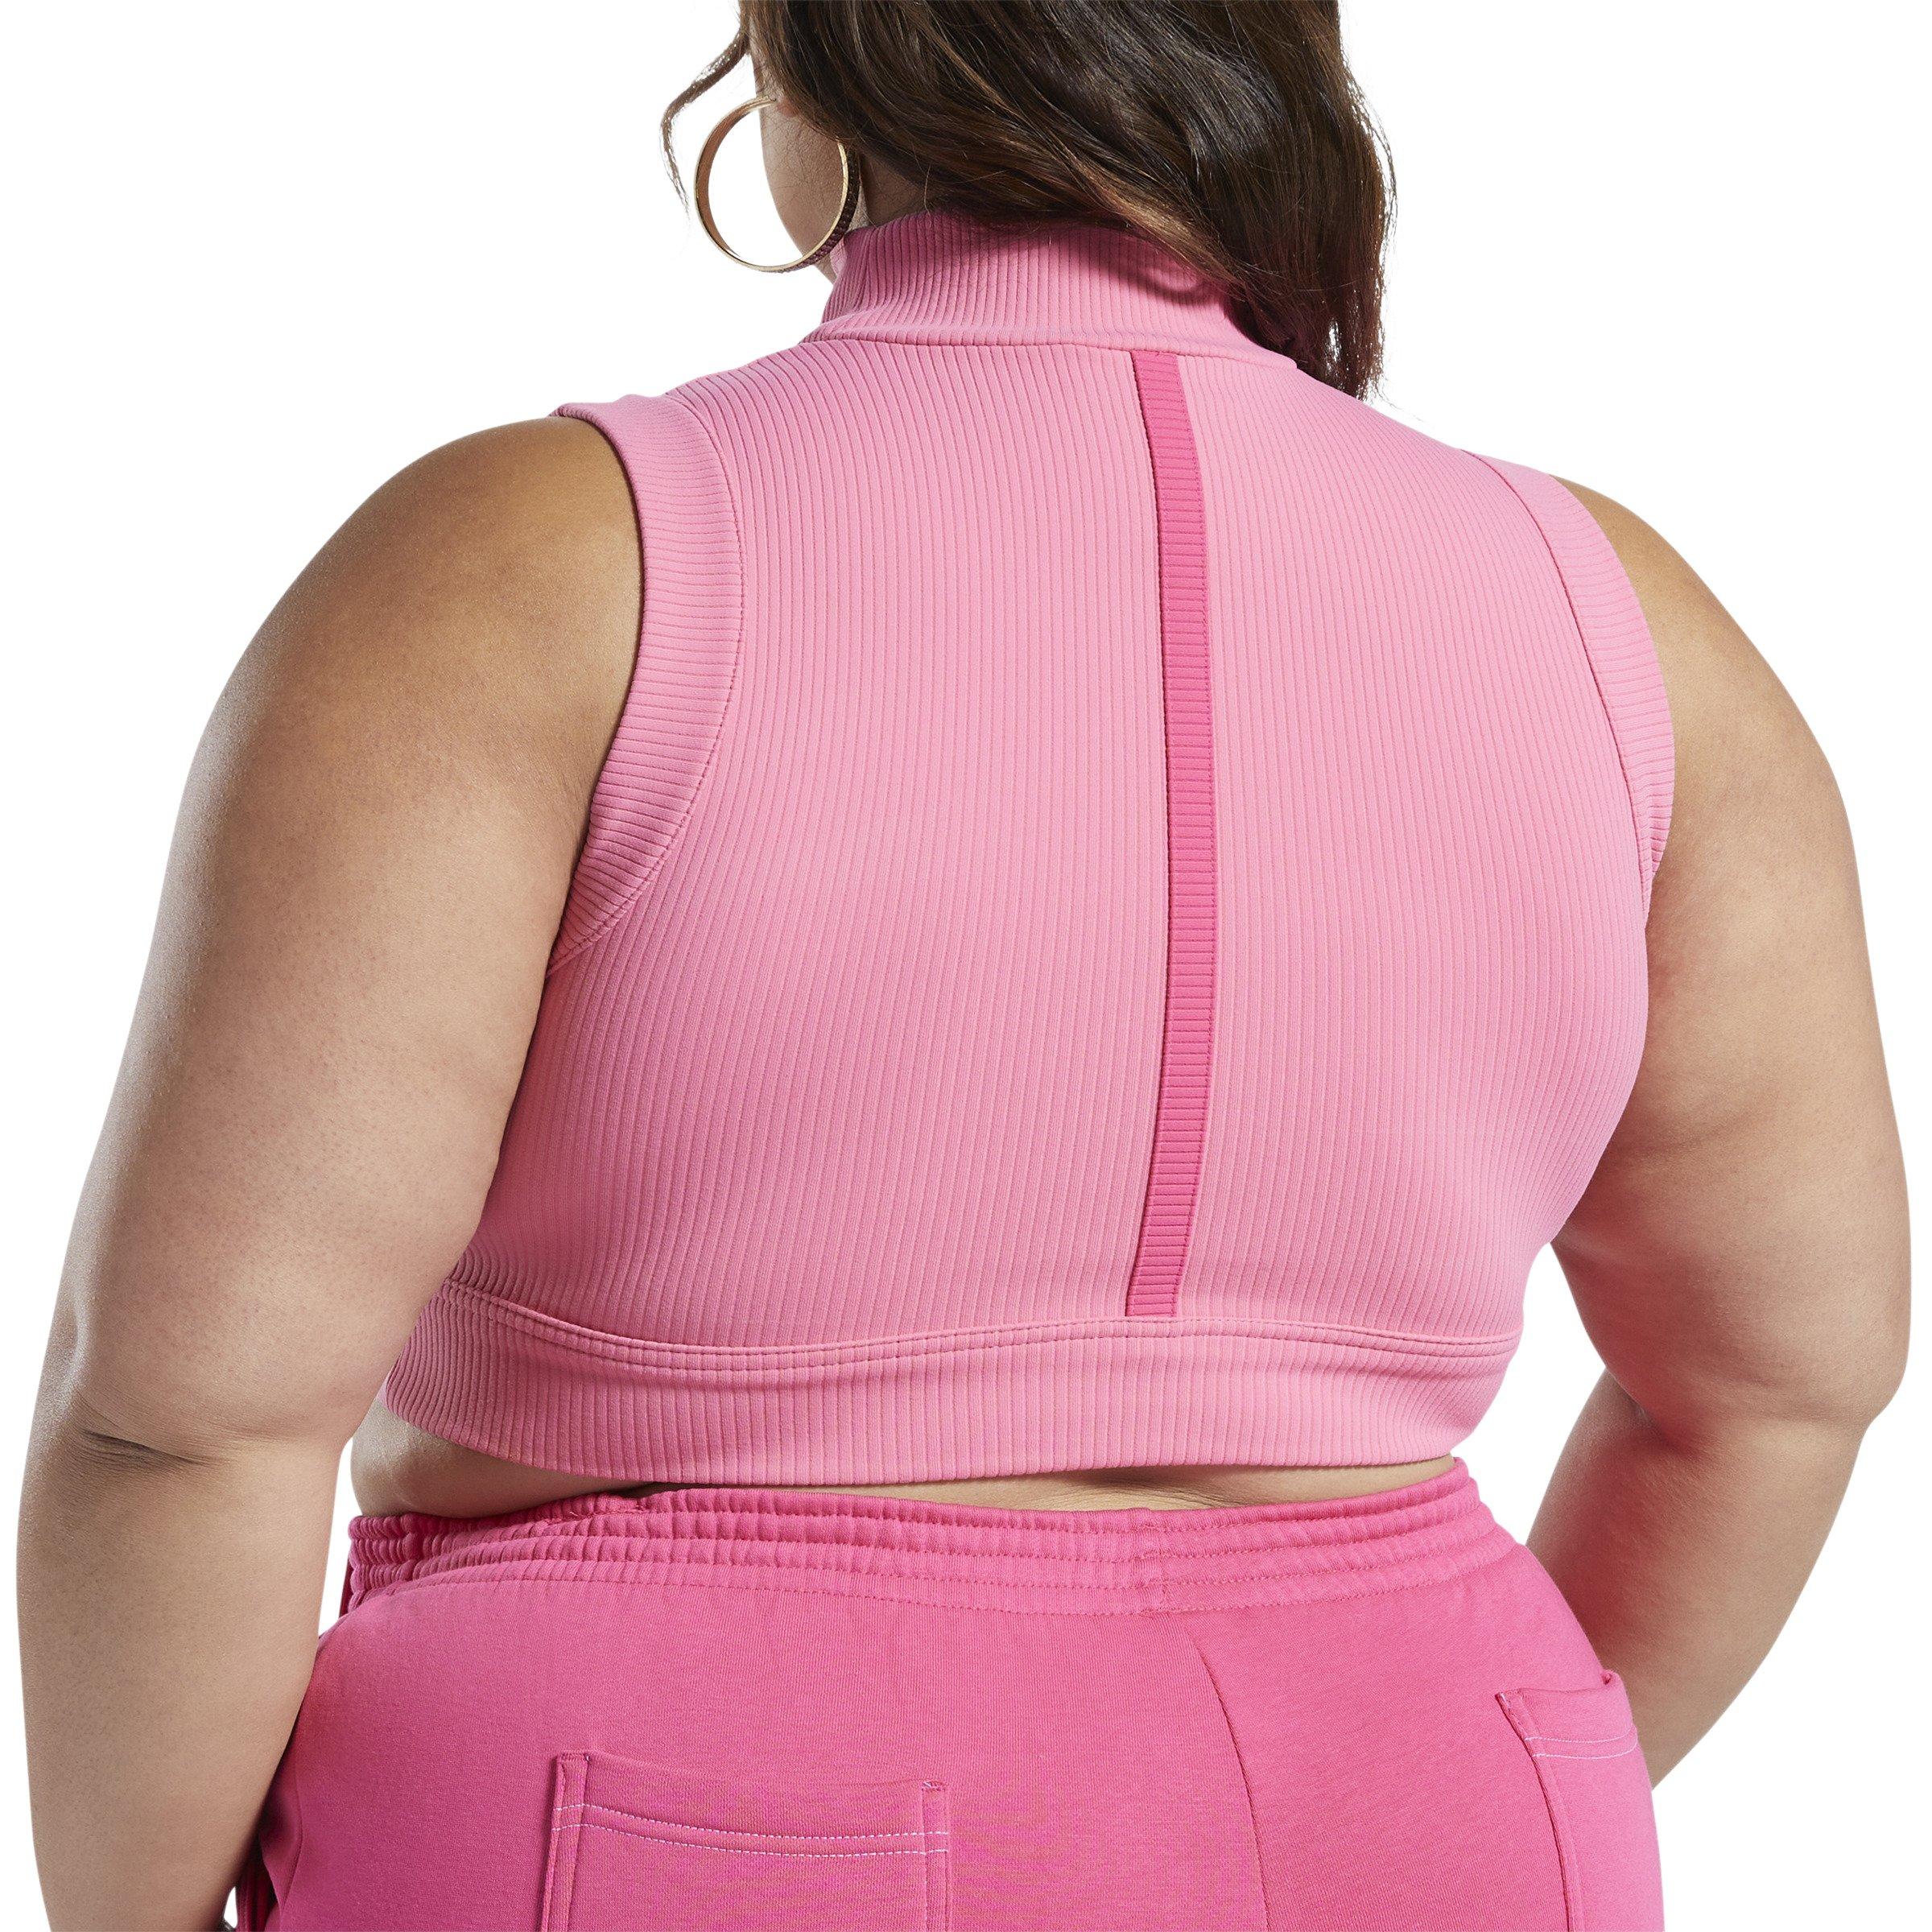 Reebok x Cardi B Crop Top Pink Sports Bra Underwired Women's Size Large